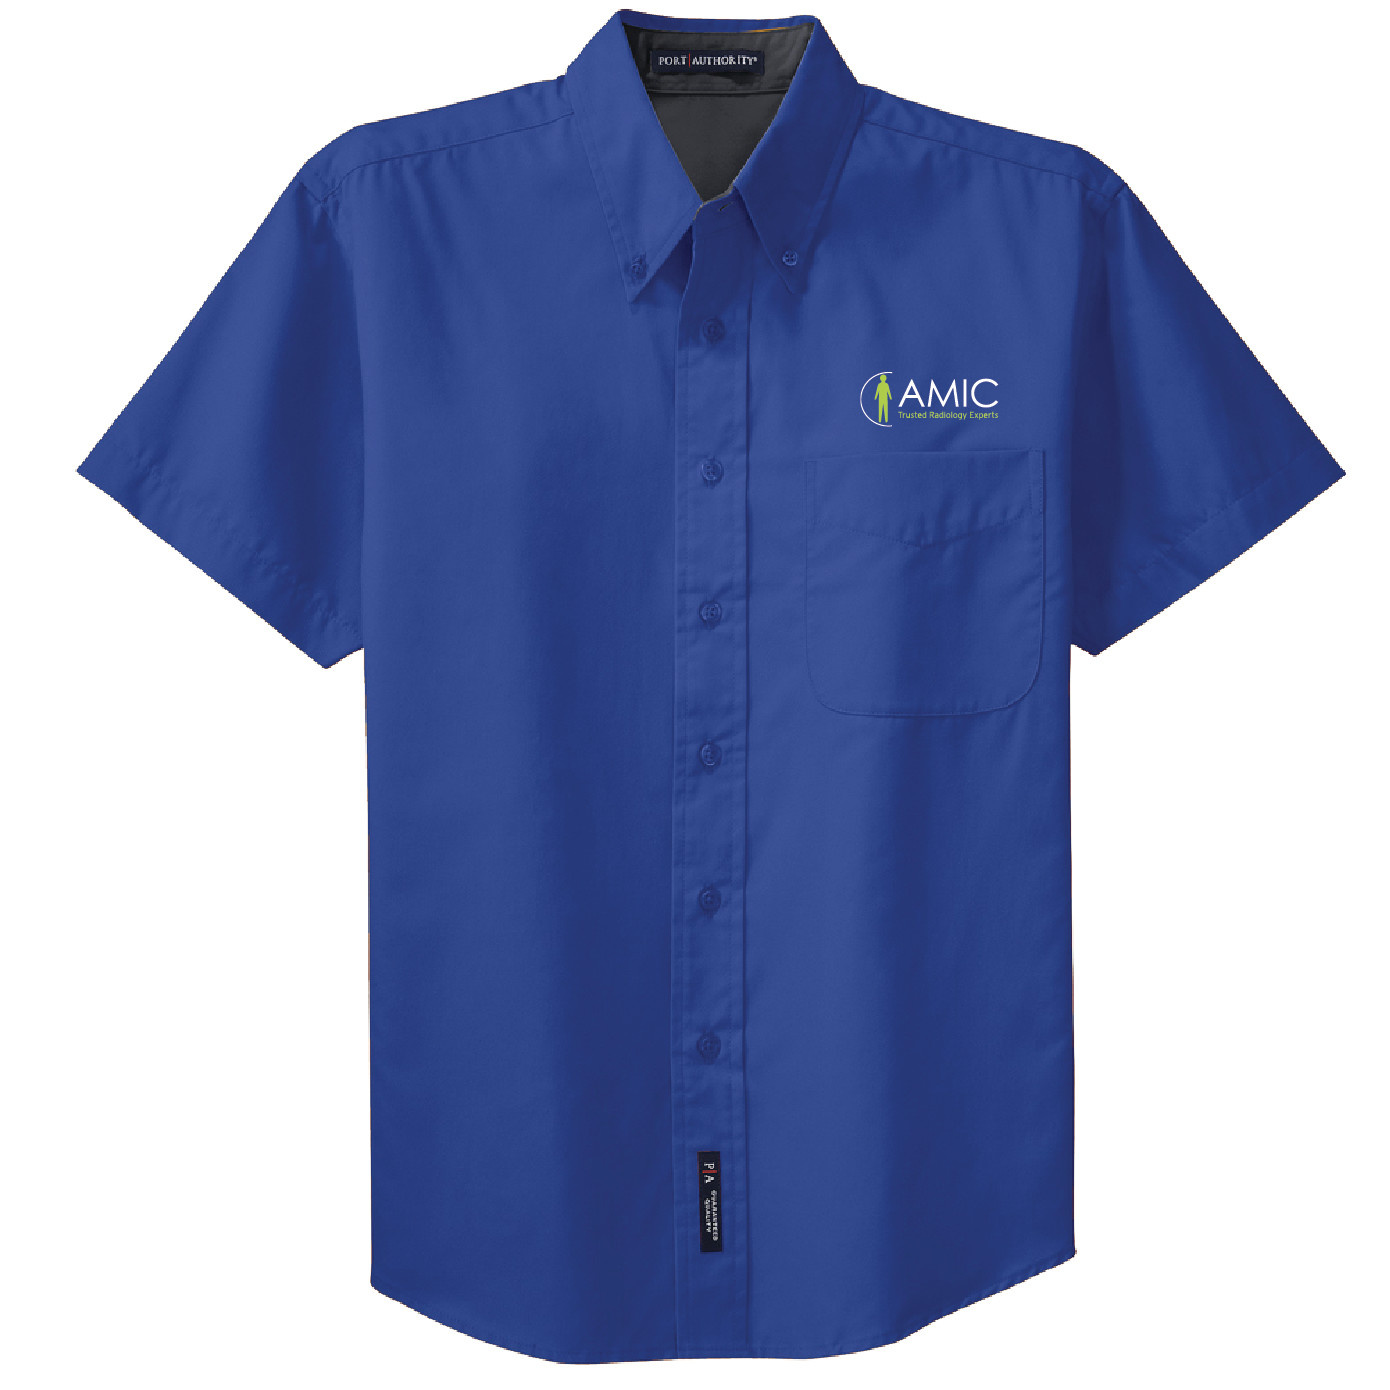 Port Authority Port Authority Short Sleeve Easy Care Shirt (Royal/Classic Navy)